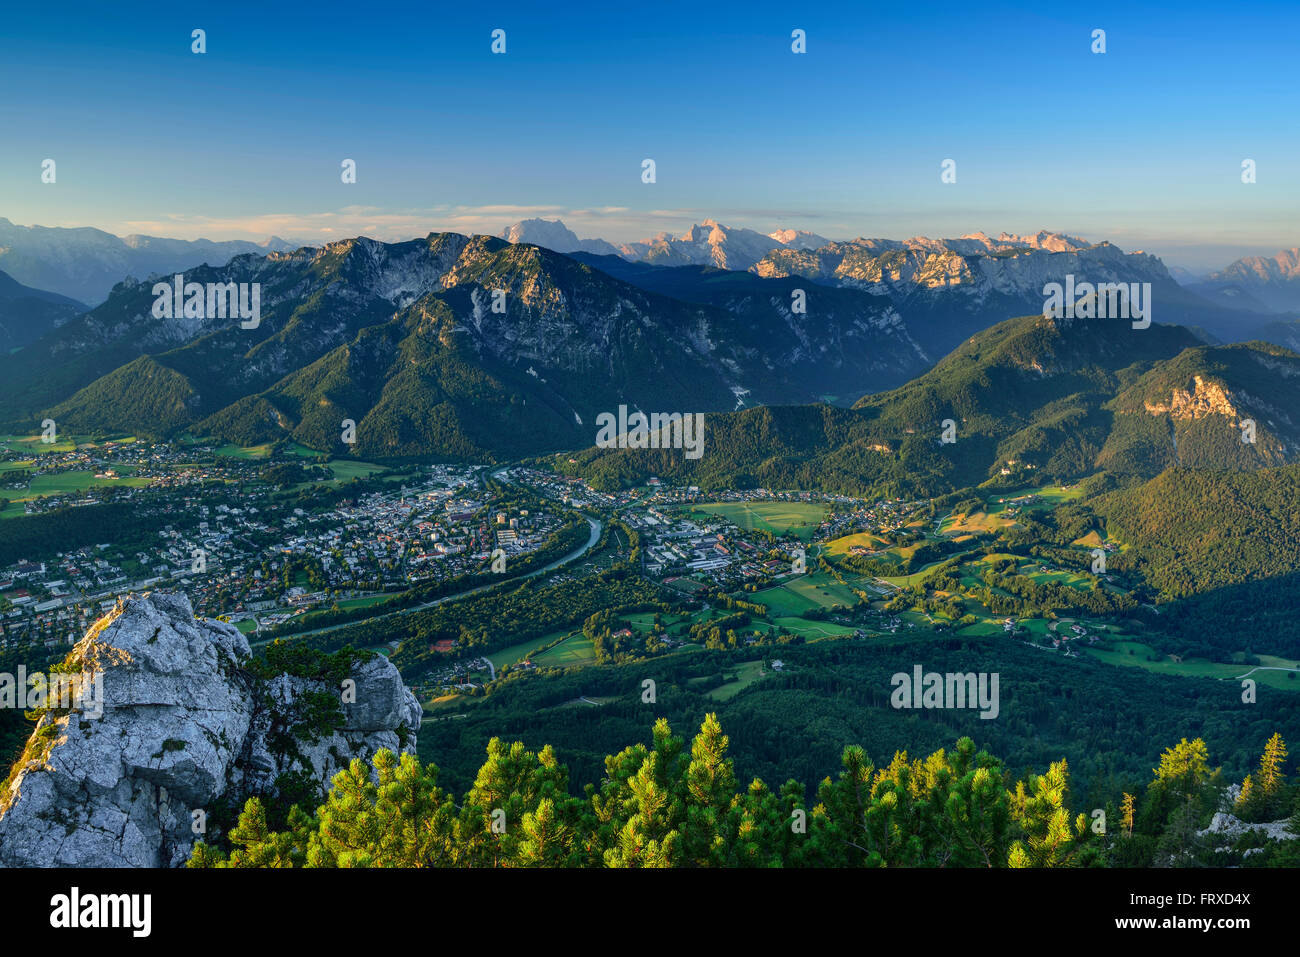 View from mount Hochstaufen over valley of Bad Reichenhall, Chiemgau Alps, Chiemgau, Upper Bavaria, Bavaria, Germany Stock Photo